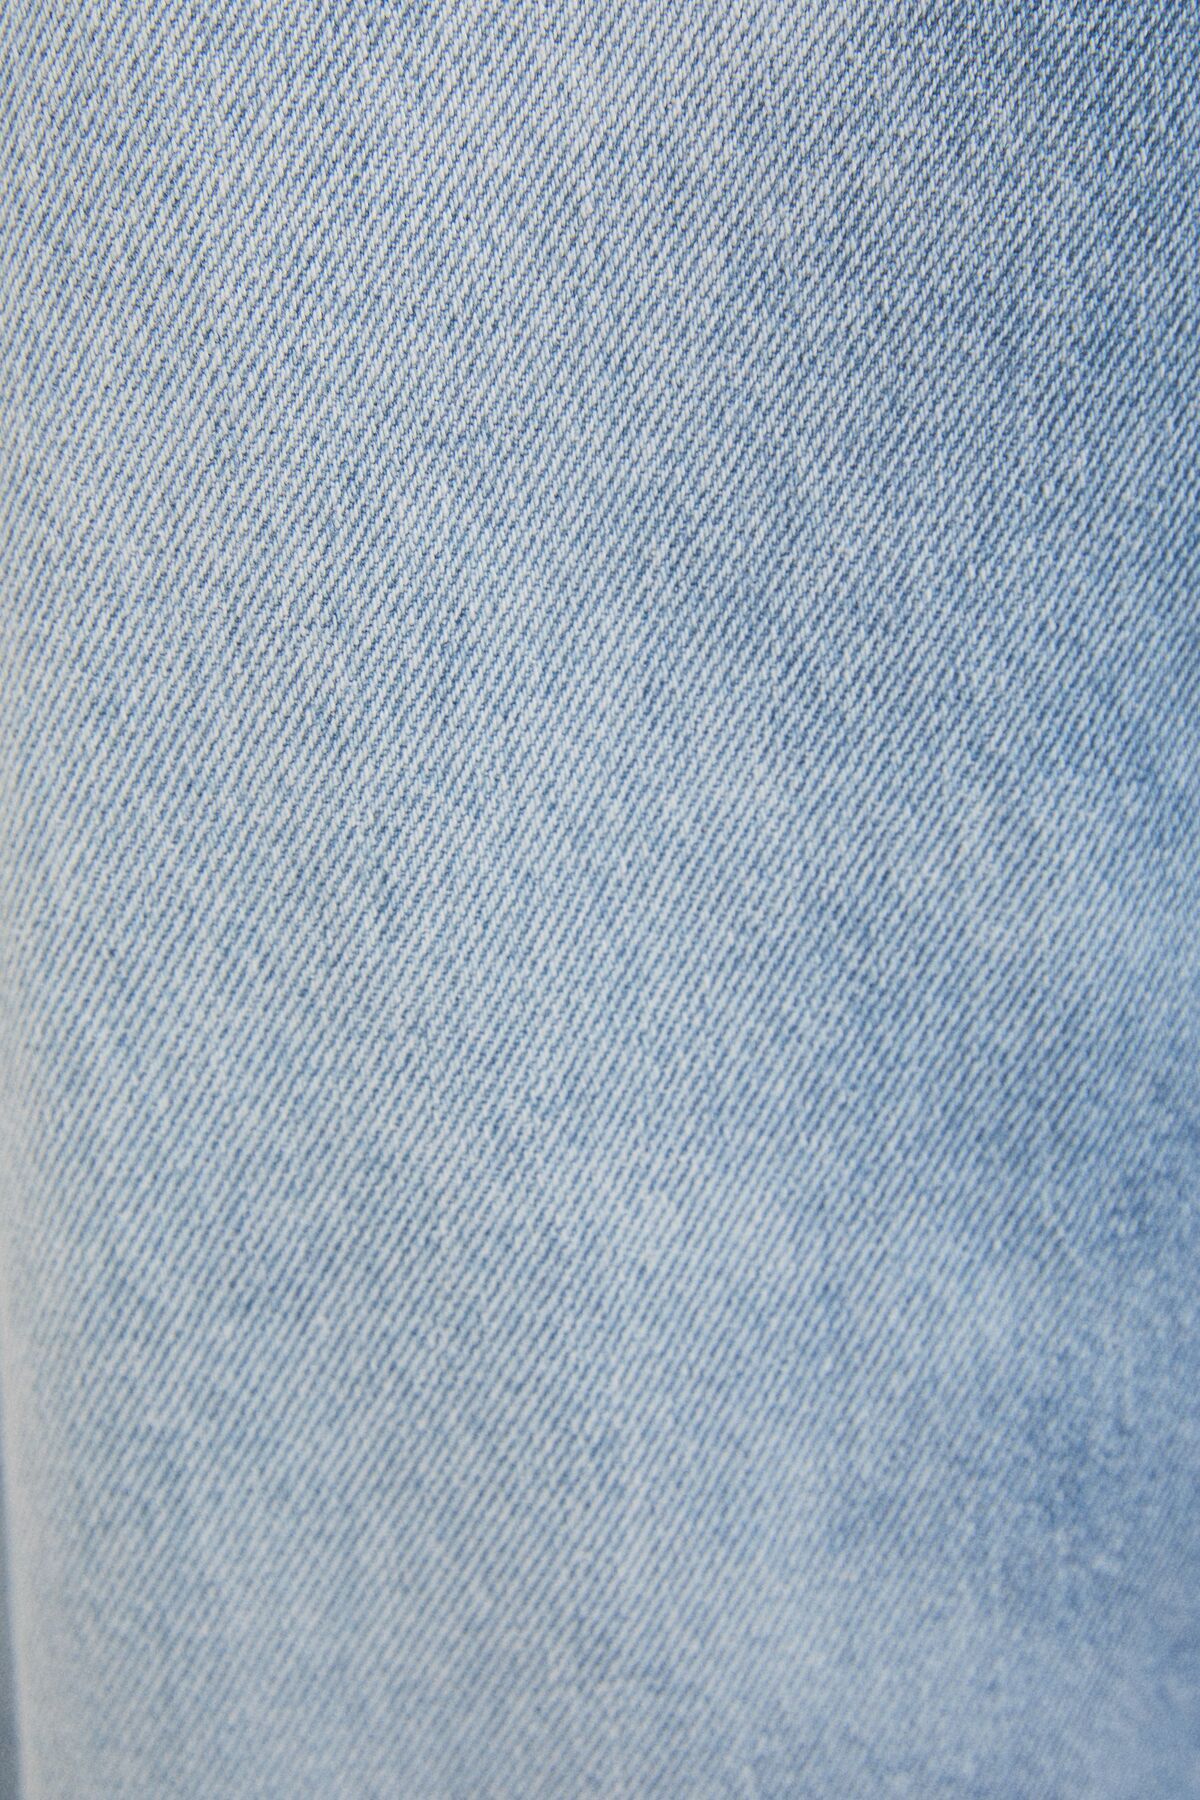 Bershka شلوار جین مناسب اسکیت باز جلوه محو شده